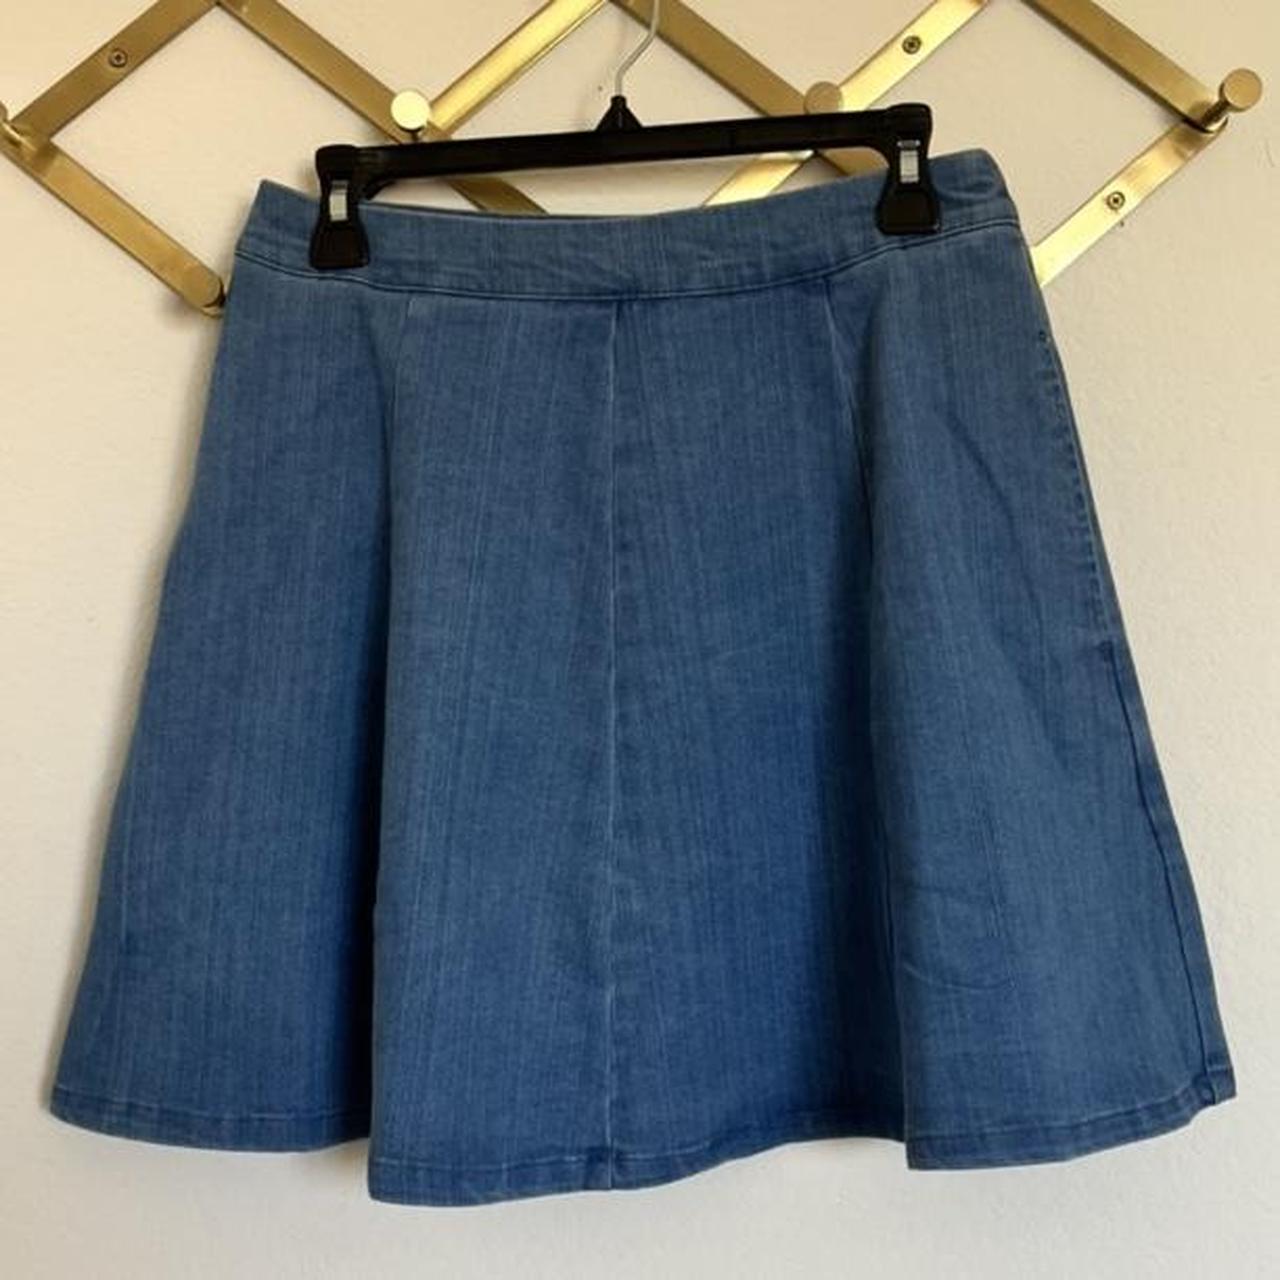 Product Image 1 - Denim Skater
medium denim skirt with